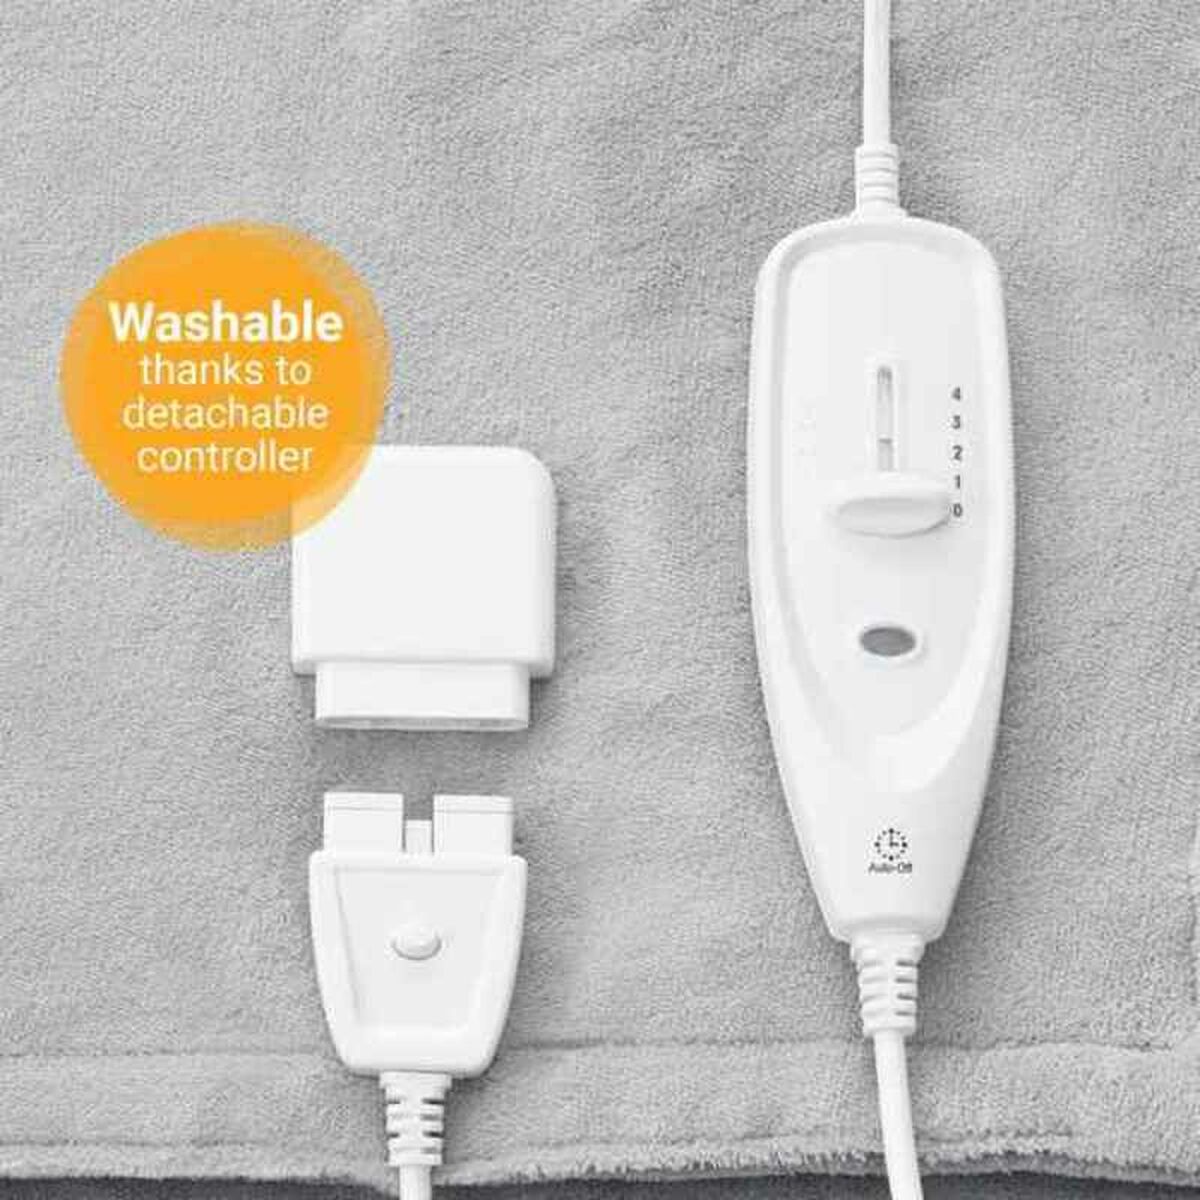 Kaufe elektrische Abdeckung Medisana HDW Grau bei AWK Flagship um € 74.00